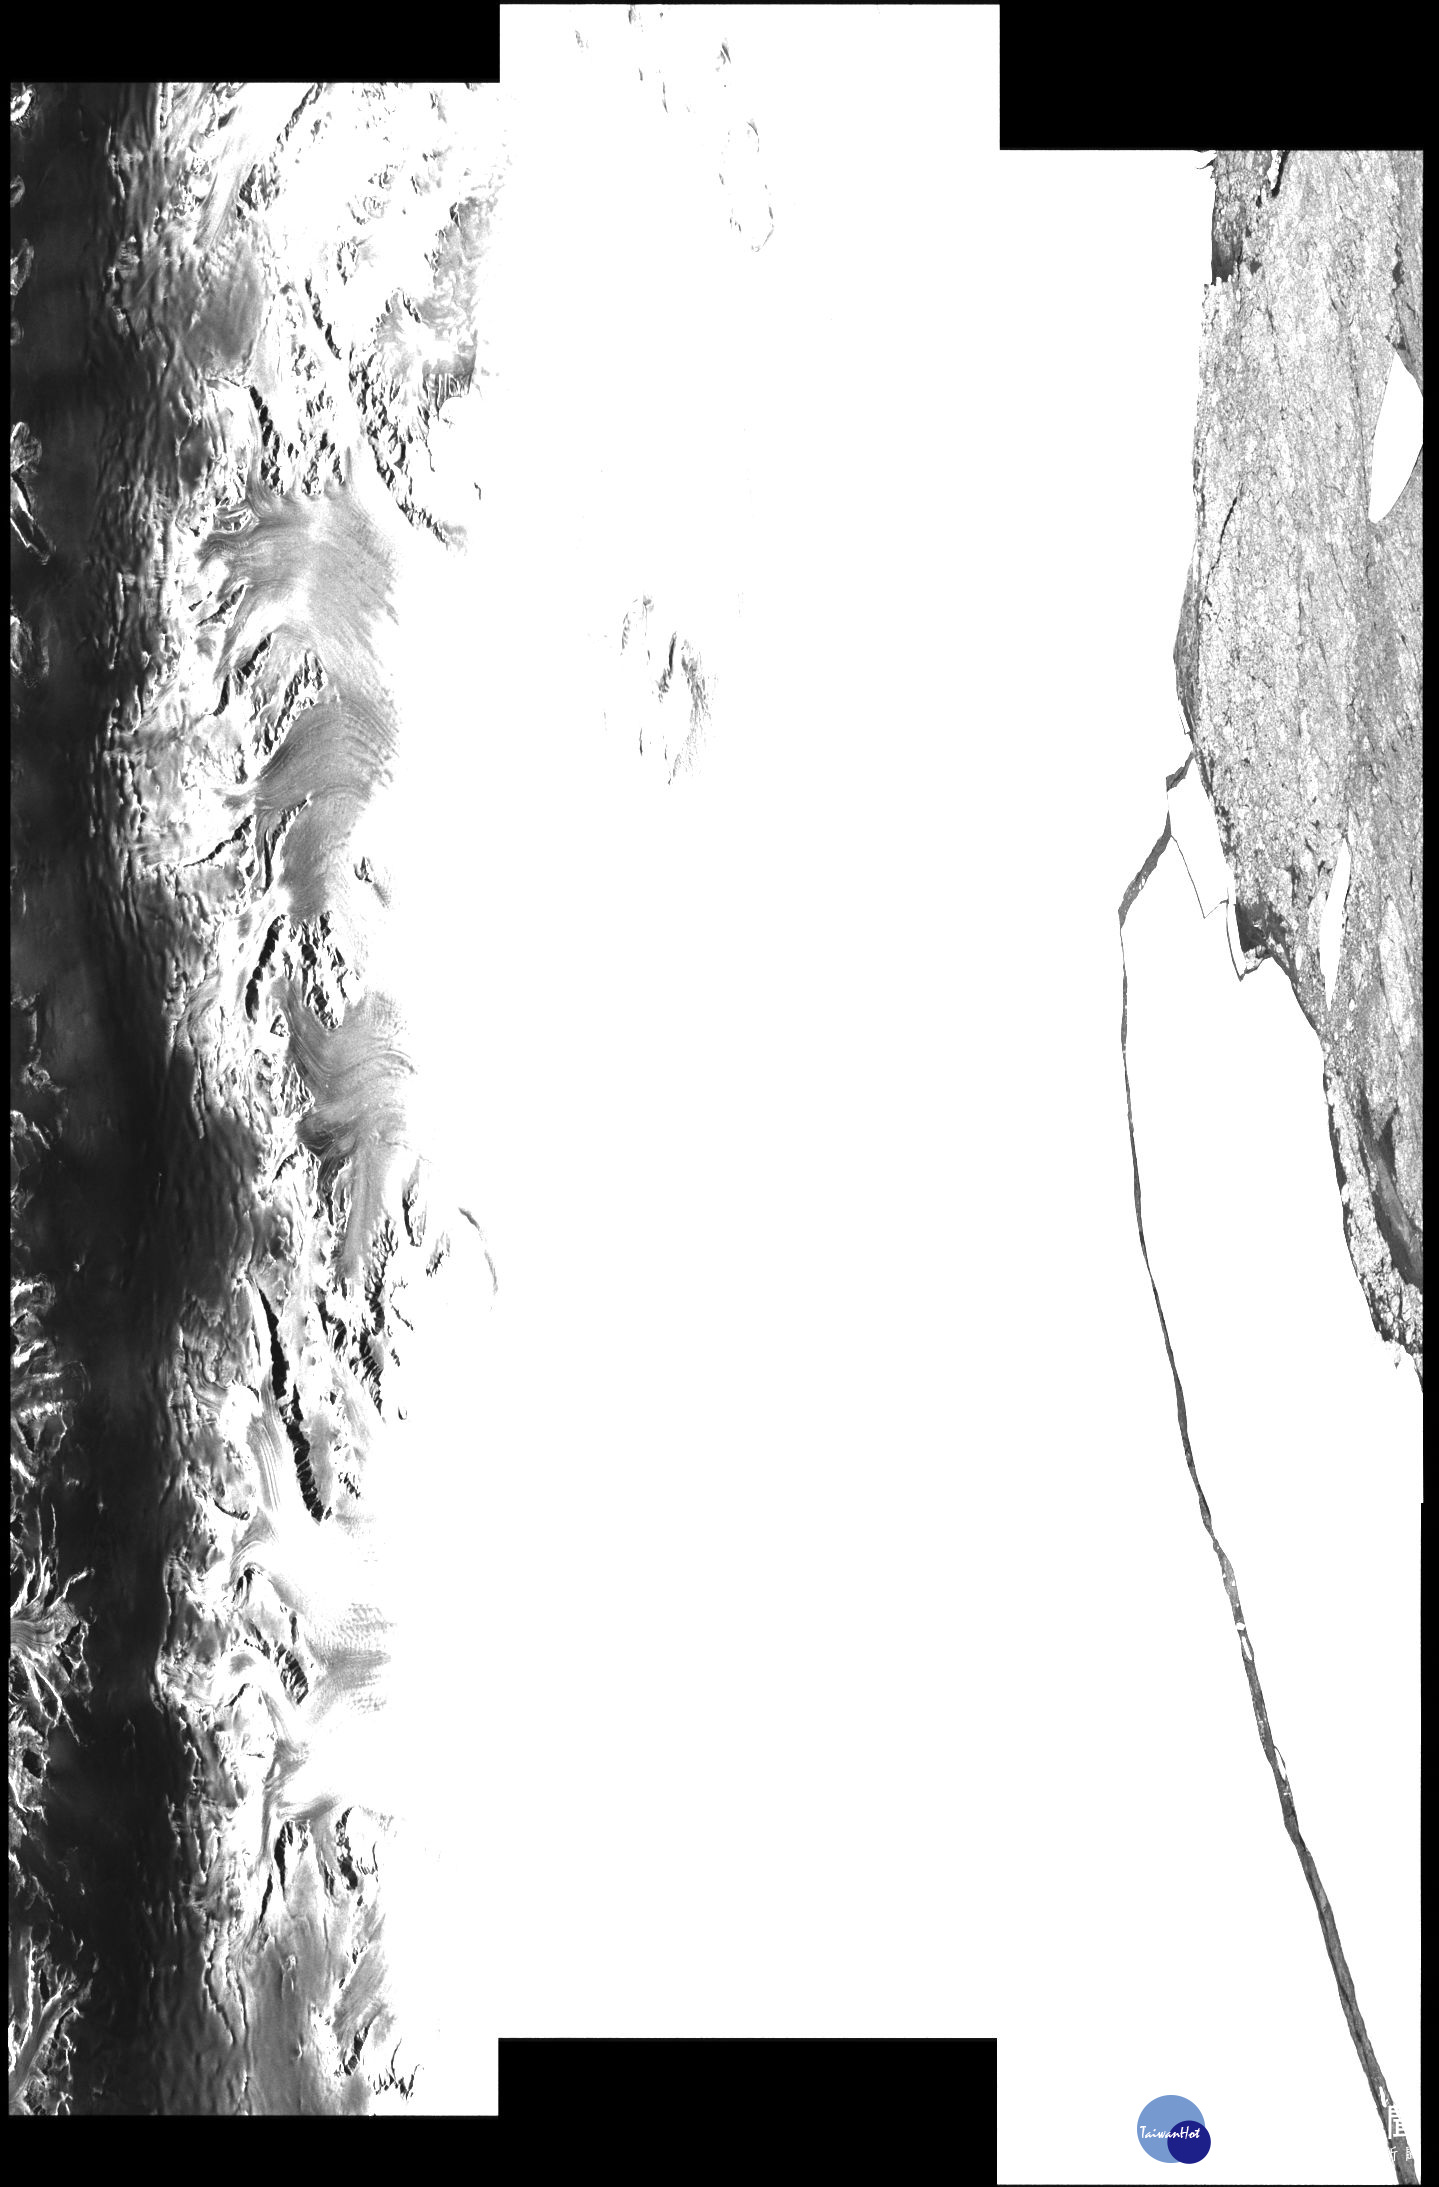 Sentinel-1雷達系列衛星於臺灣時間7月18日下午四時所拍攝之影像。右側為斷裂分離的冰山區域。(照片：中央大學太空及遙測研究中心提供)